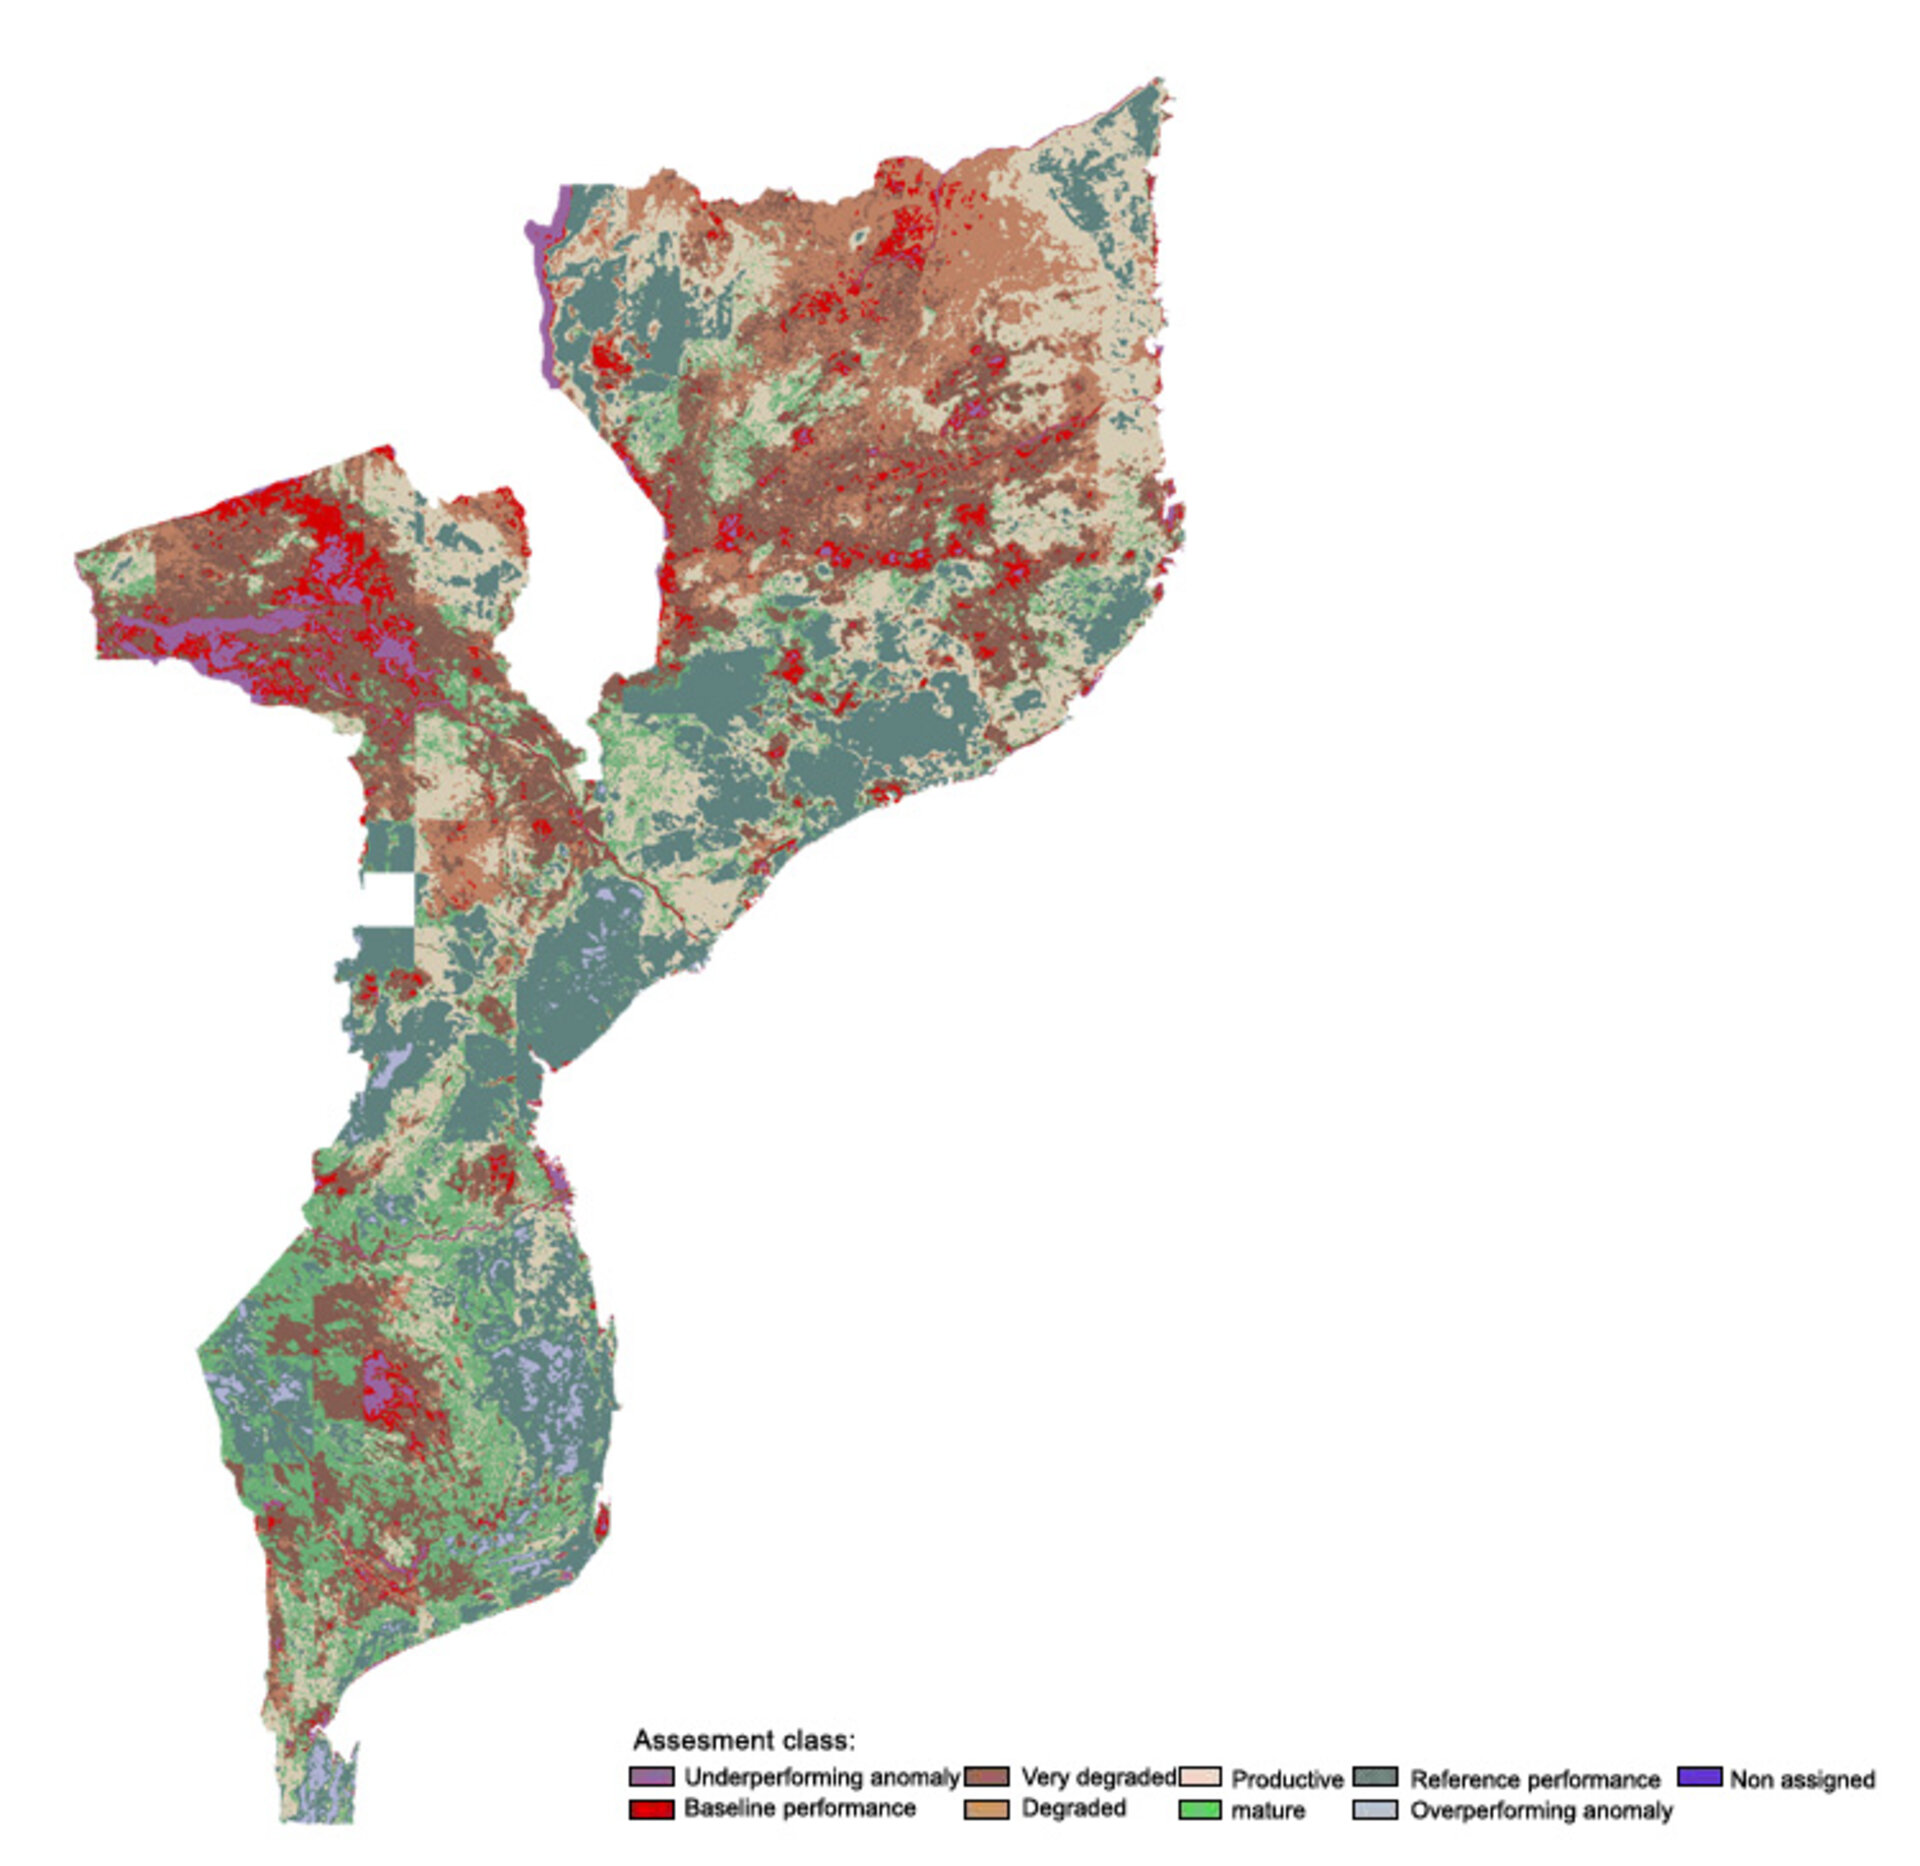 Land degradation in Mozambique